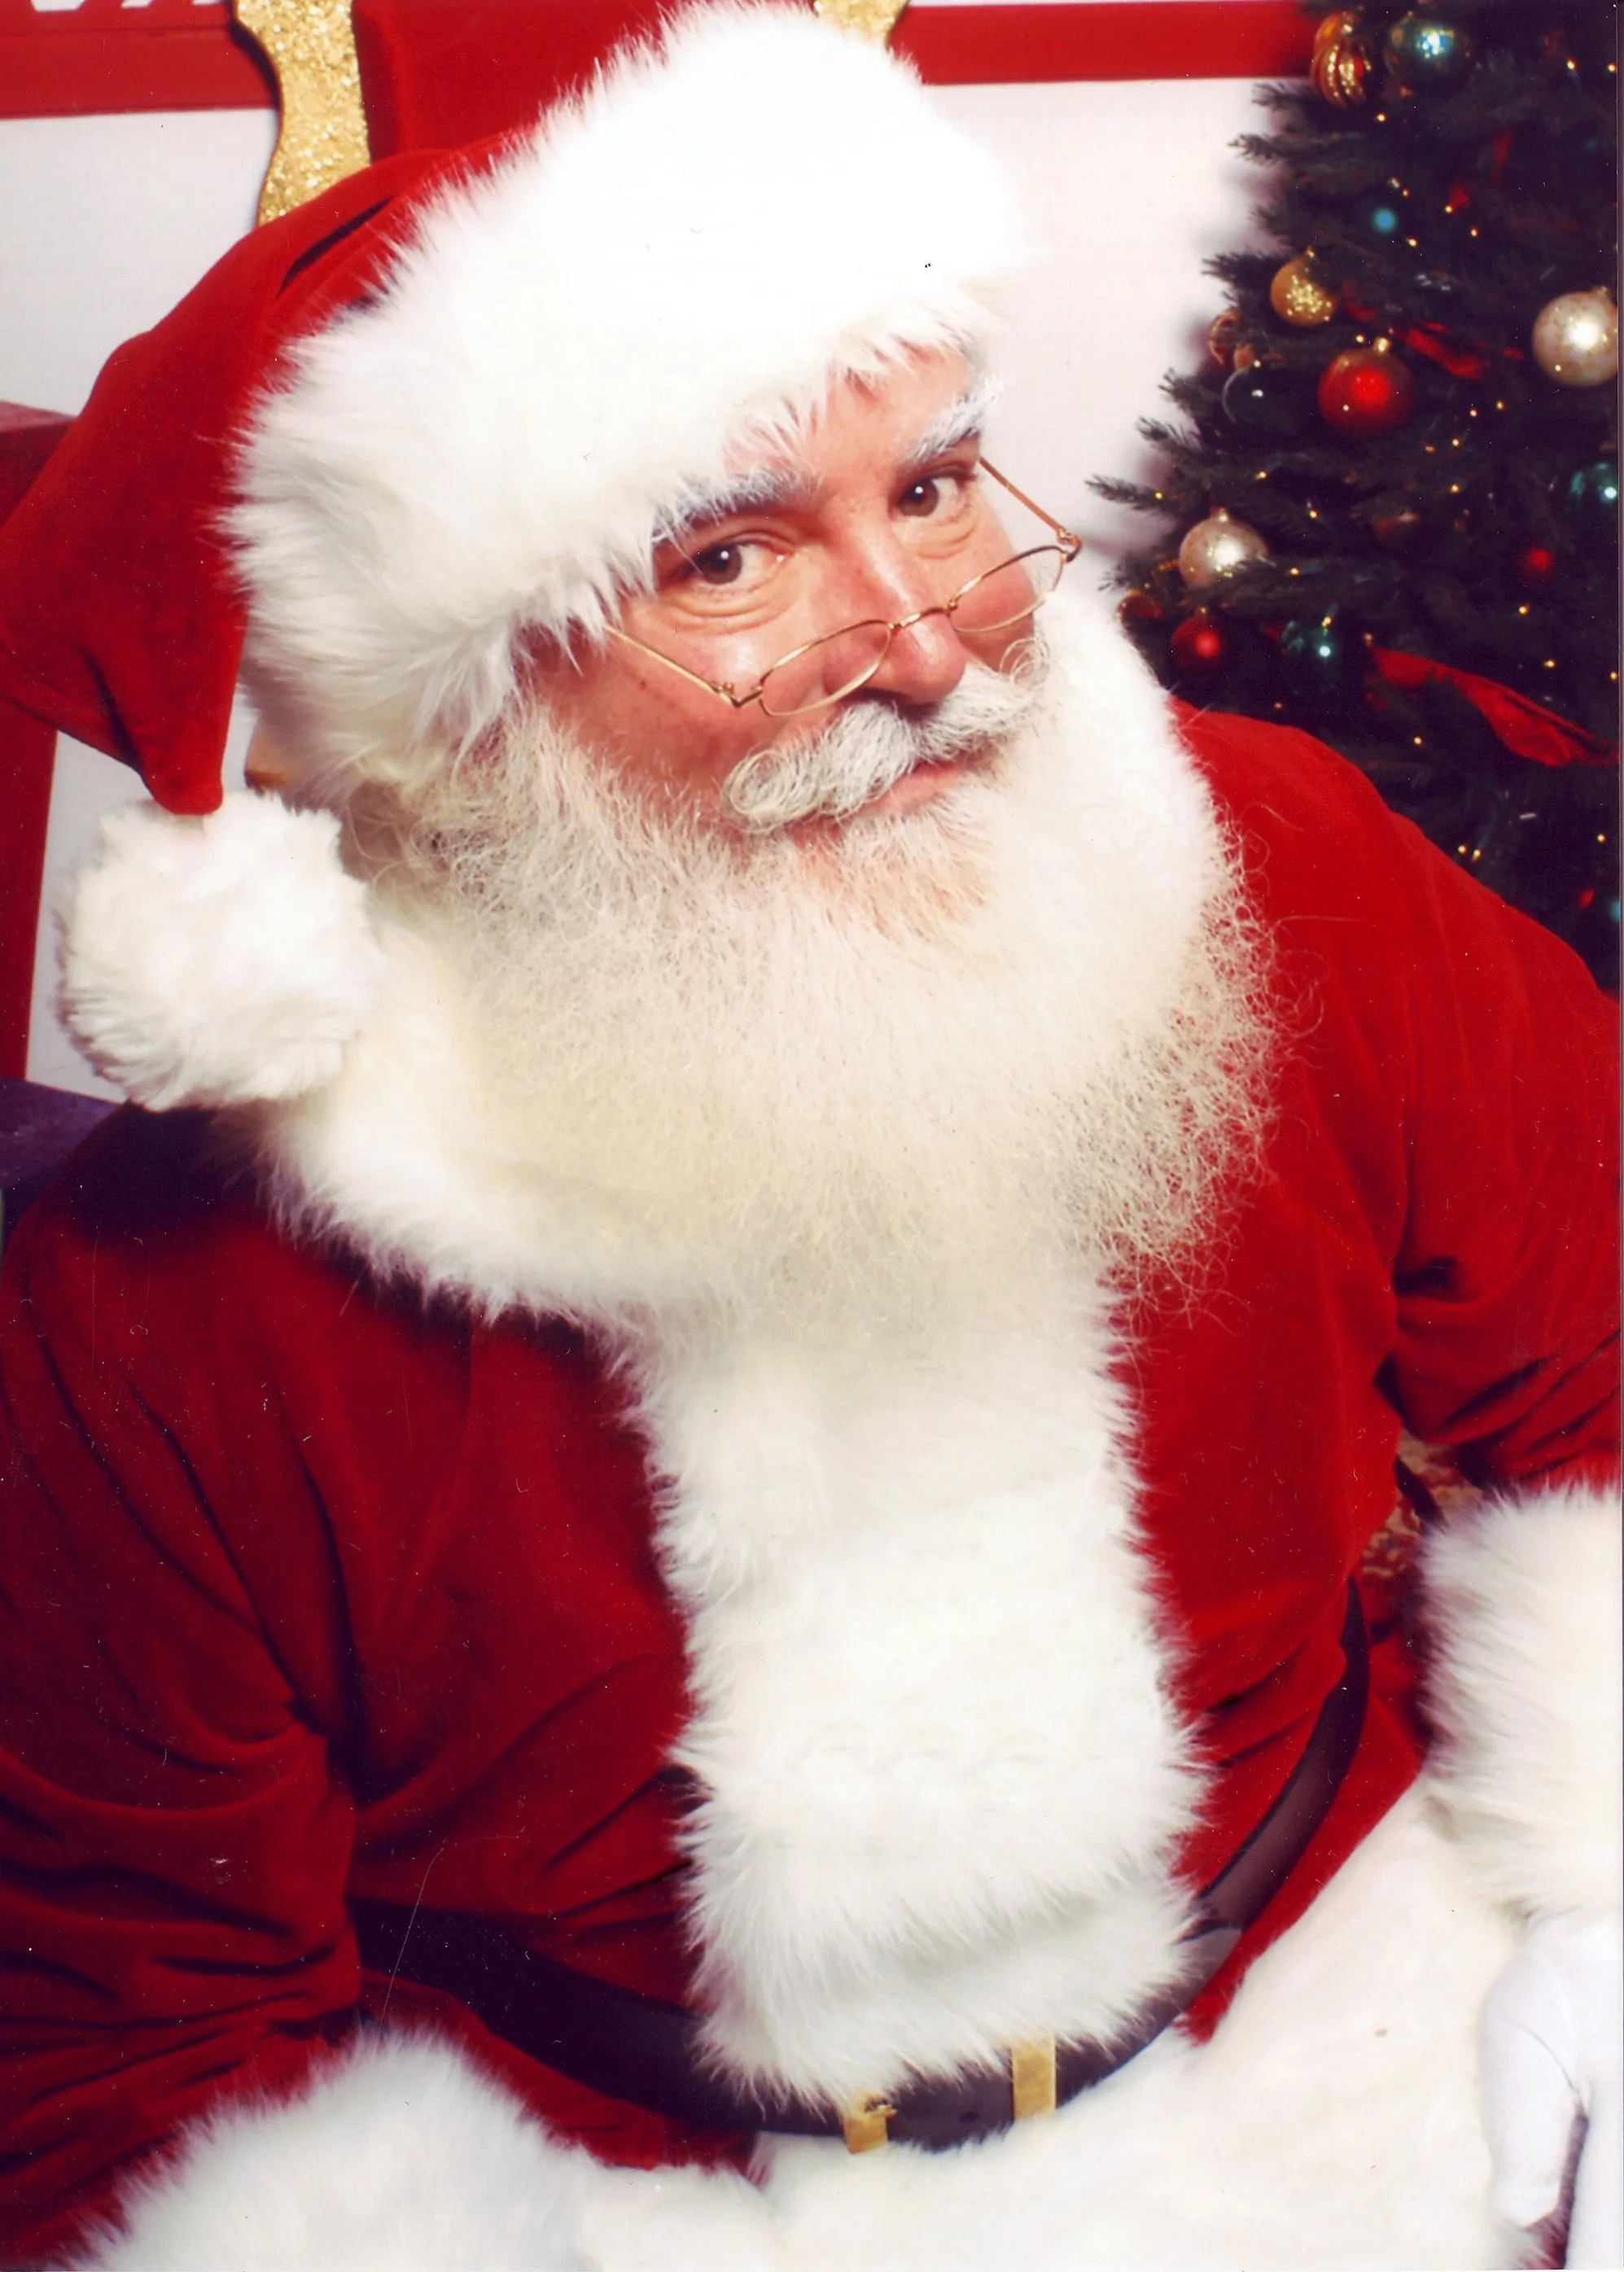 Santa Claus - Wikipedia, the free encyclopedia